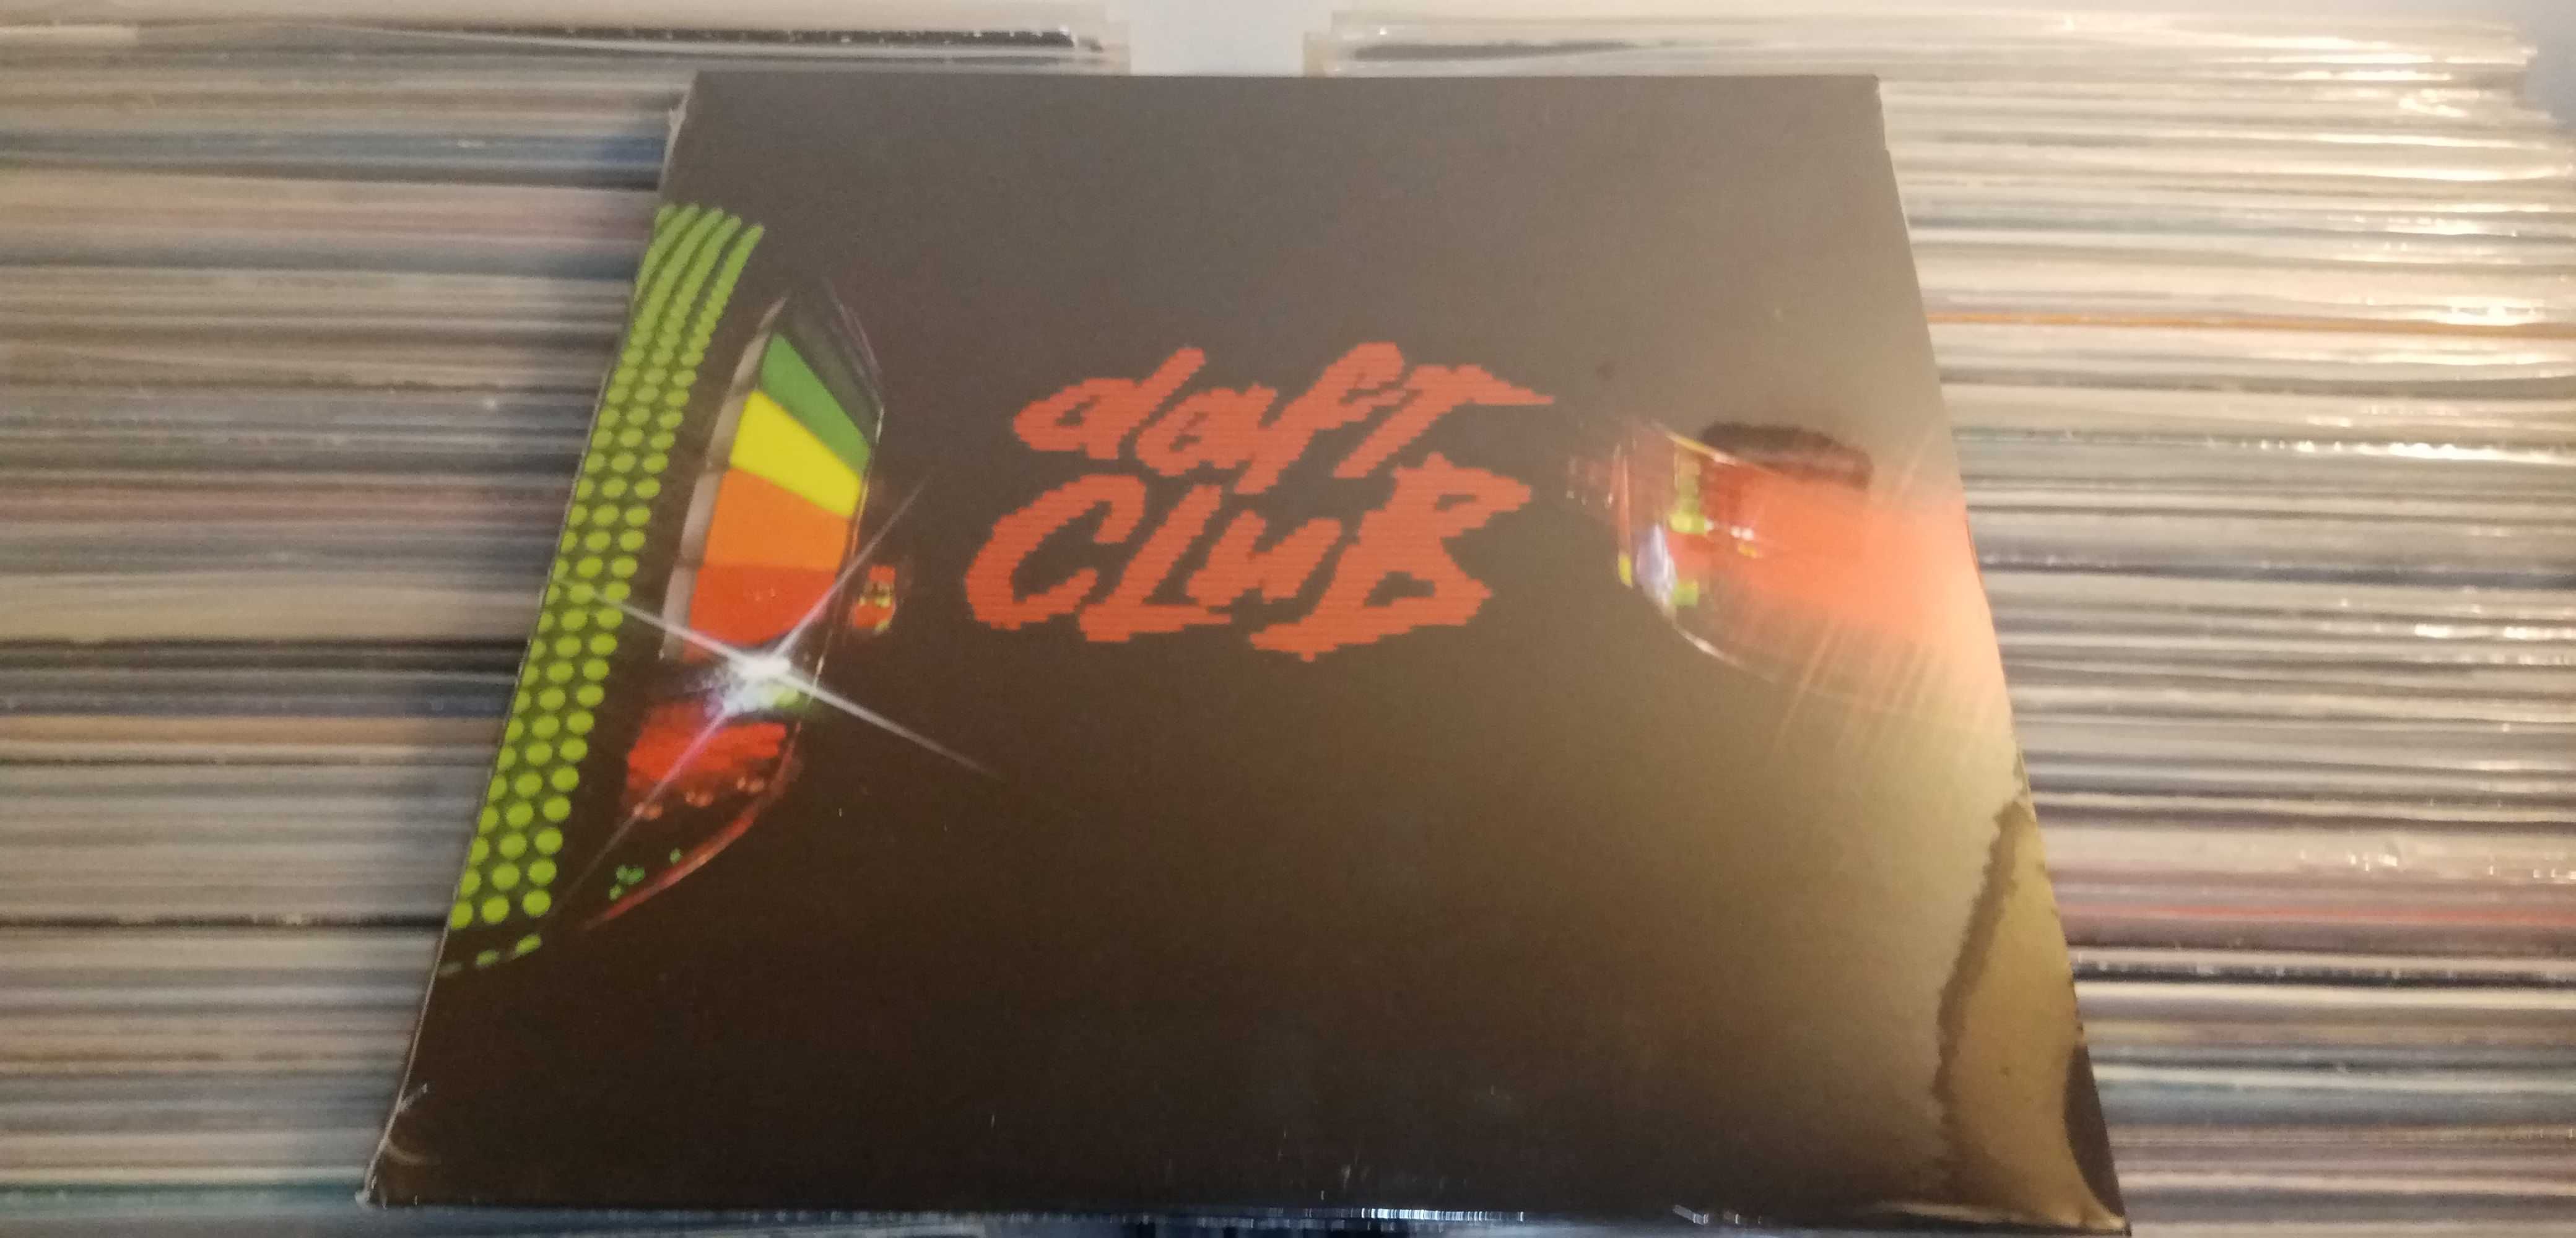 Vinil: Daft Punk - Daft Club 2xLP (LER DESCRIÇÃO)